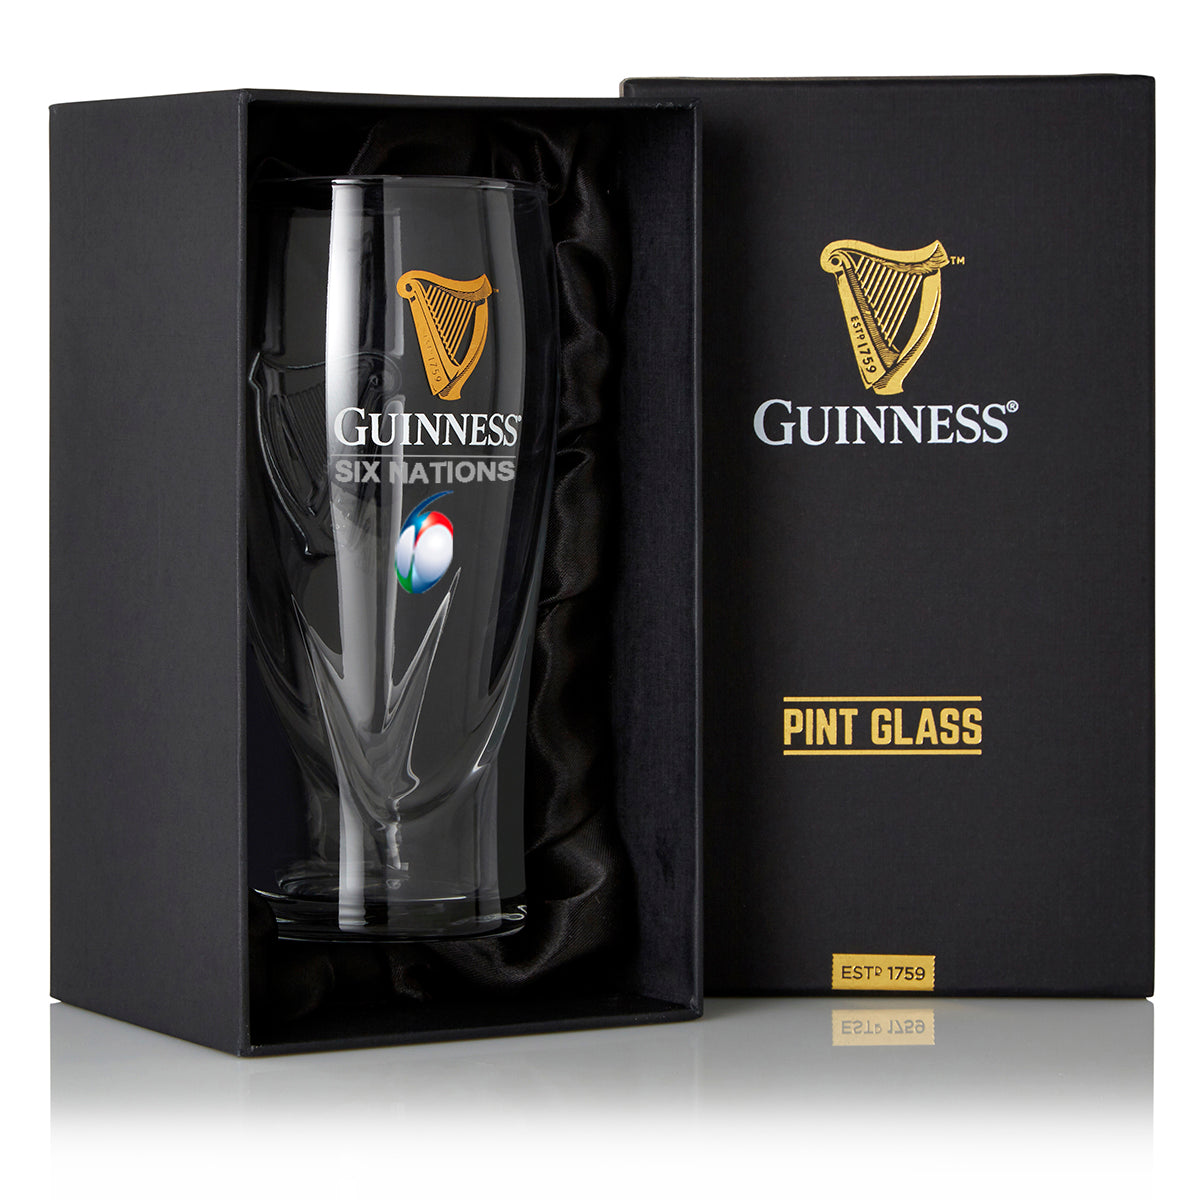 Guinness Six Nations Pint Glass